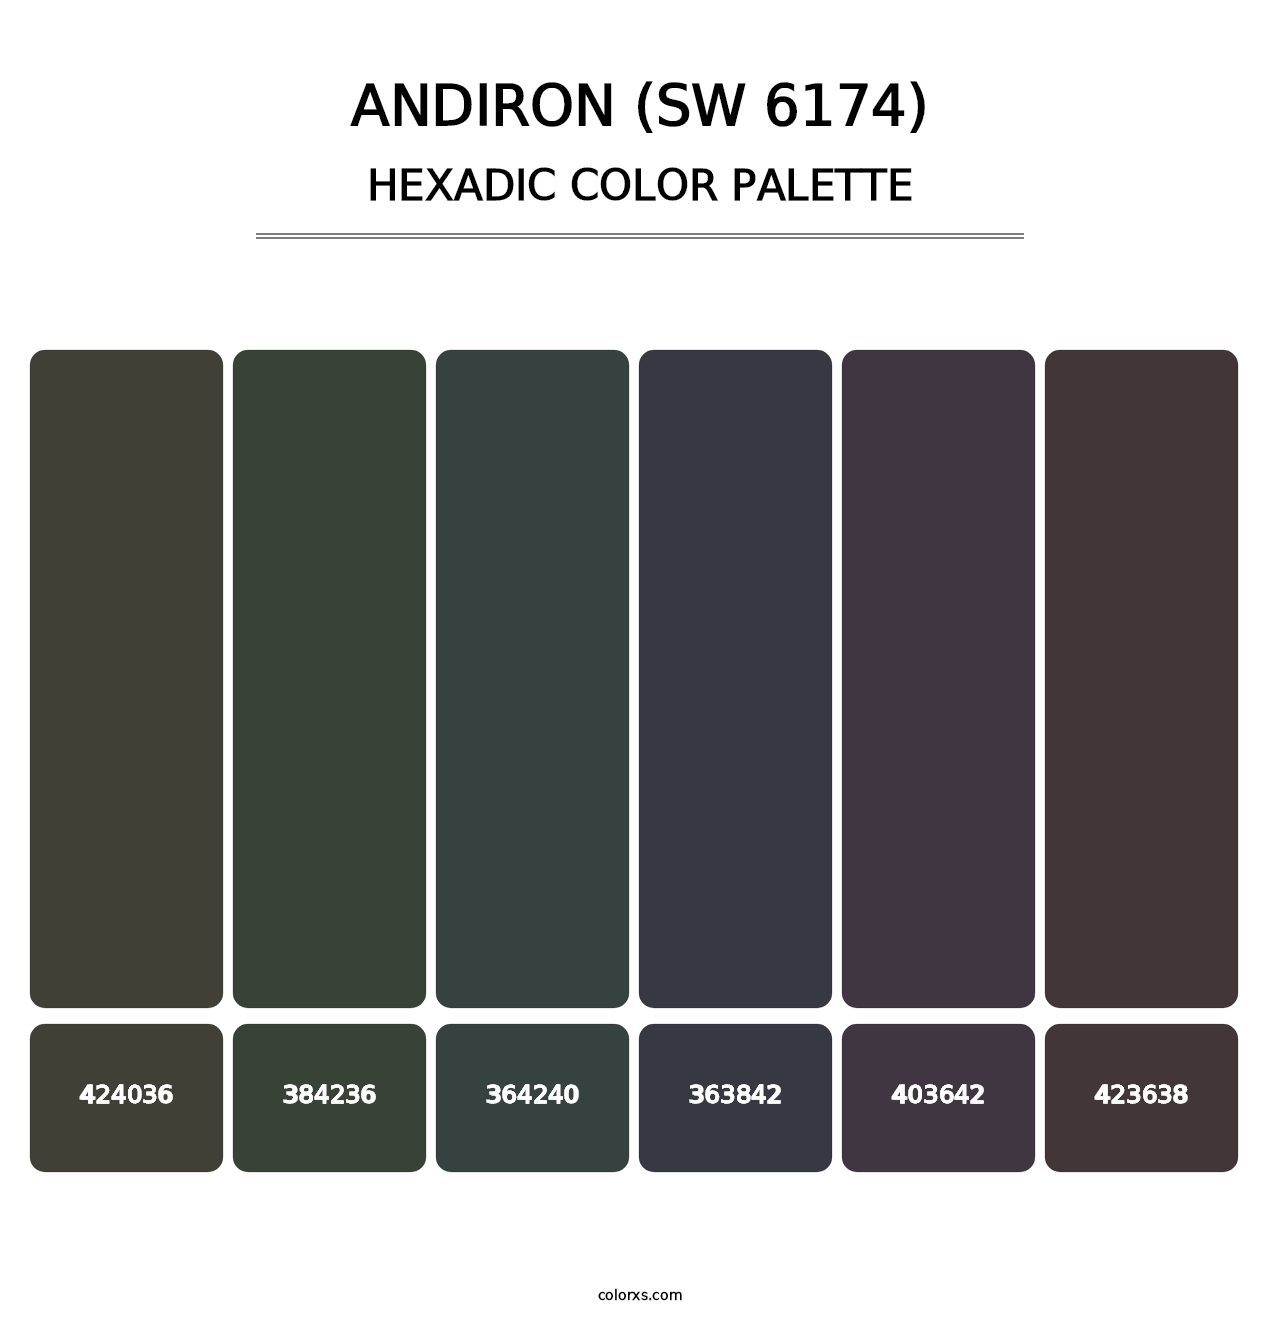 Andiron (SW 6174) - Hexadic Color Palette